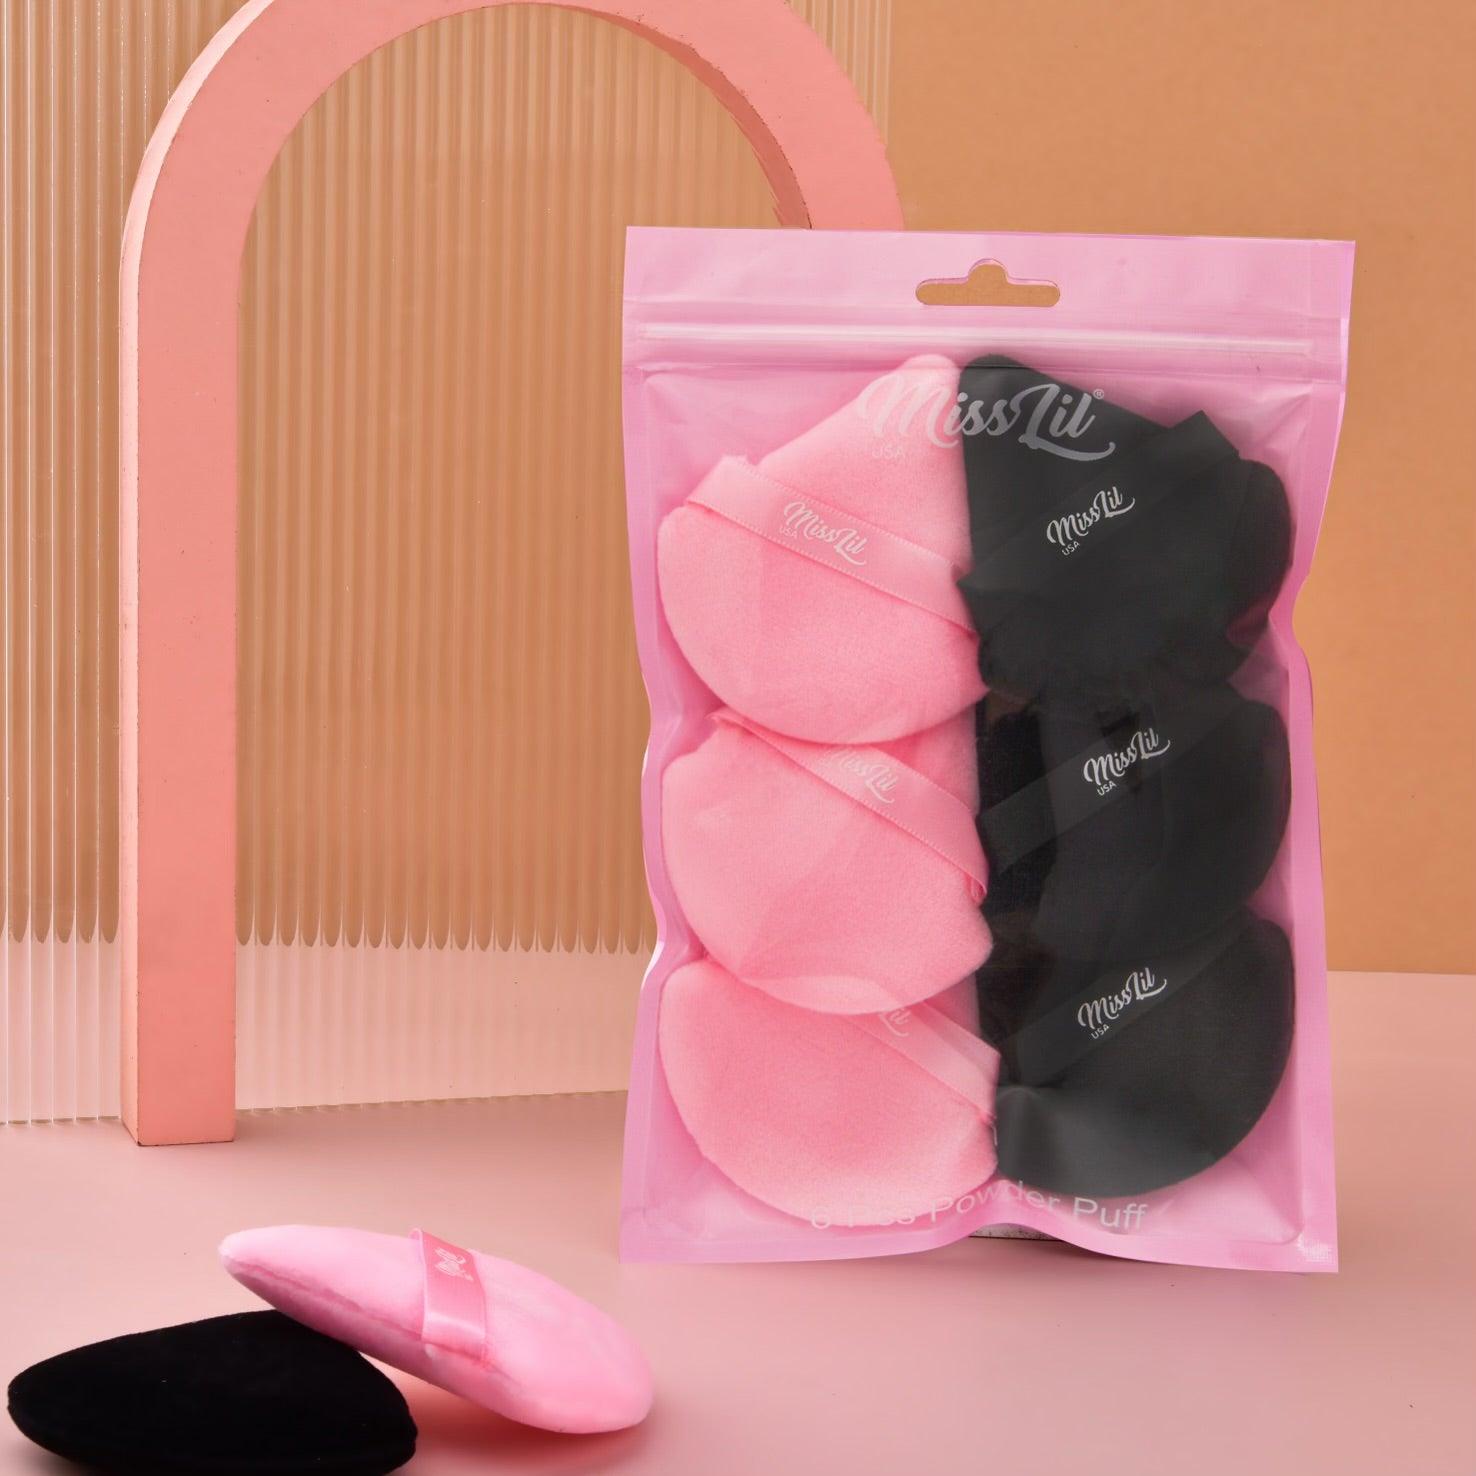 Powder puffs pink and black - Miss Lil USA Wholesale